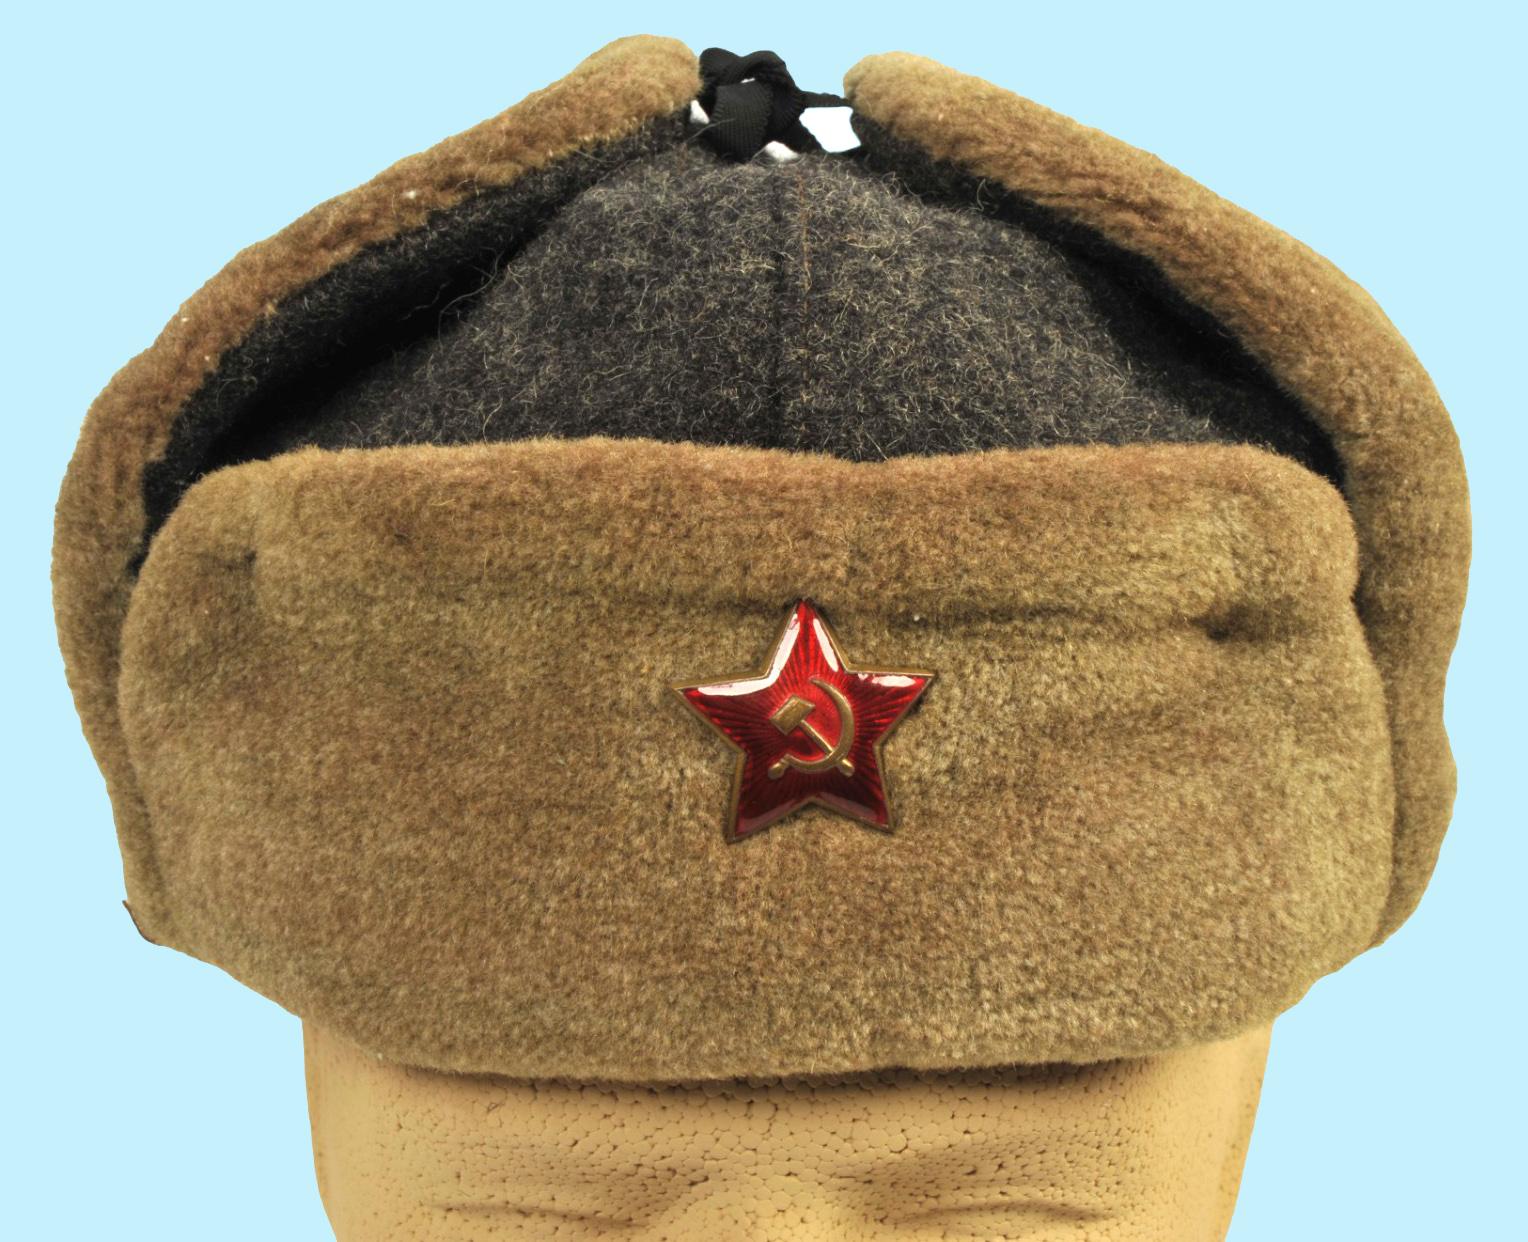 Soviet Military WWII era Ushanka Winter Fur Fatigue Cap (AH)